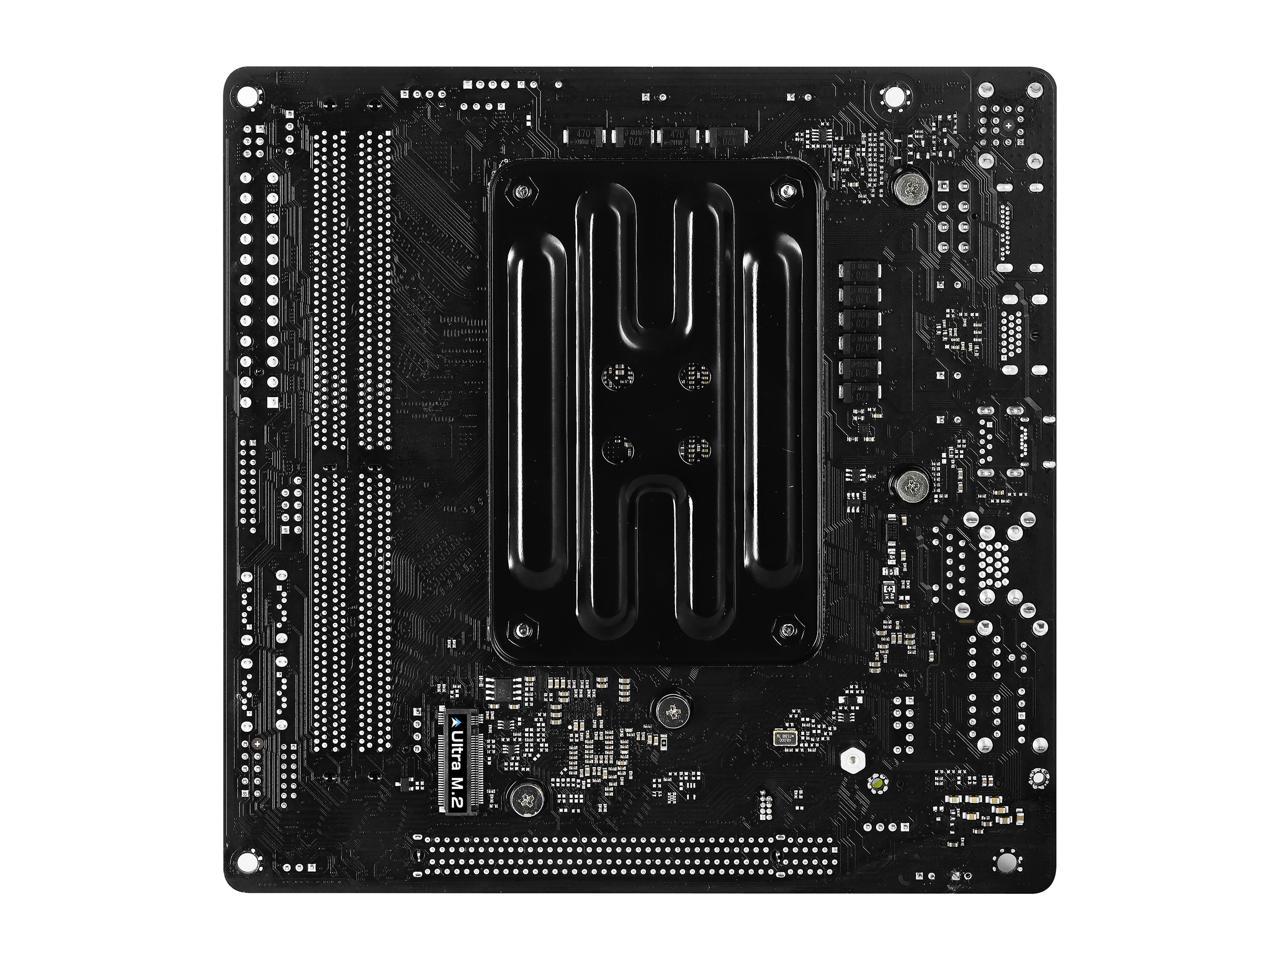 ASRock Fatal1ty X470 Gaming-ITX/ac AM4 AMD Ryzen 3000 Series CPU Ready Mini  ITX AMD Motherboard